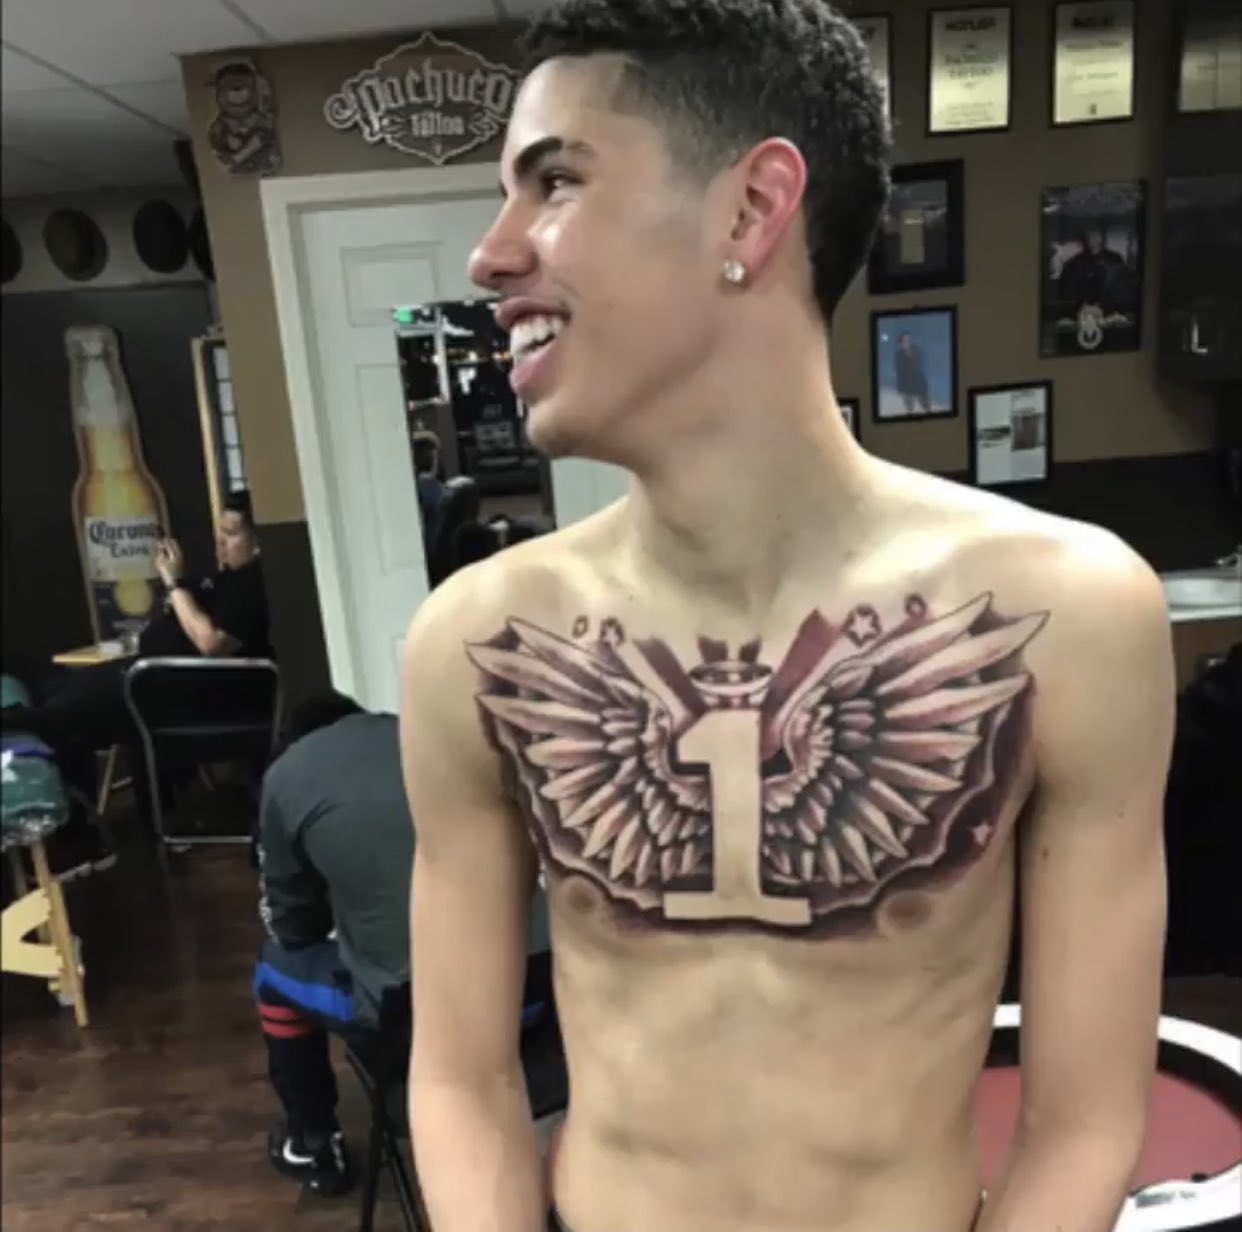 burly-lark18: amazing chest tattoo desing